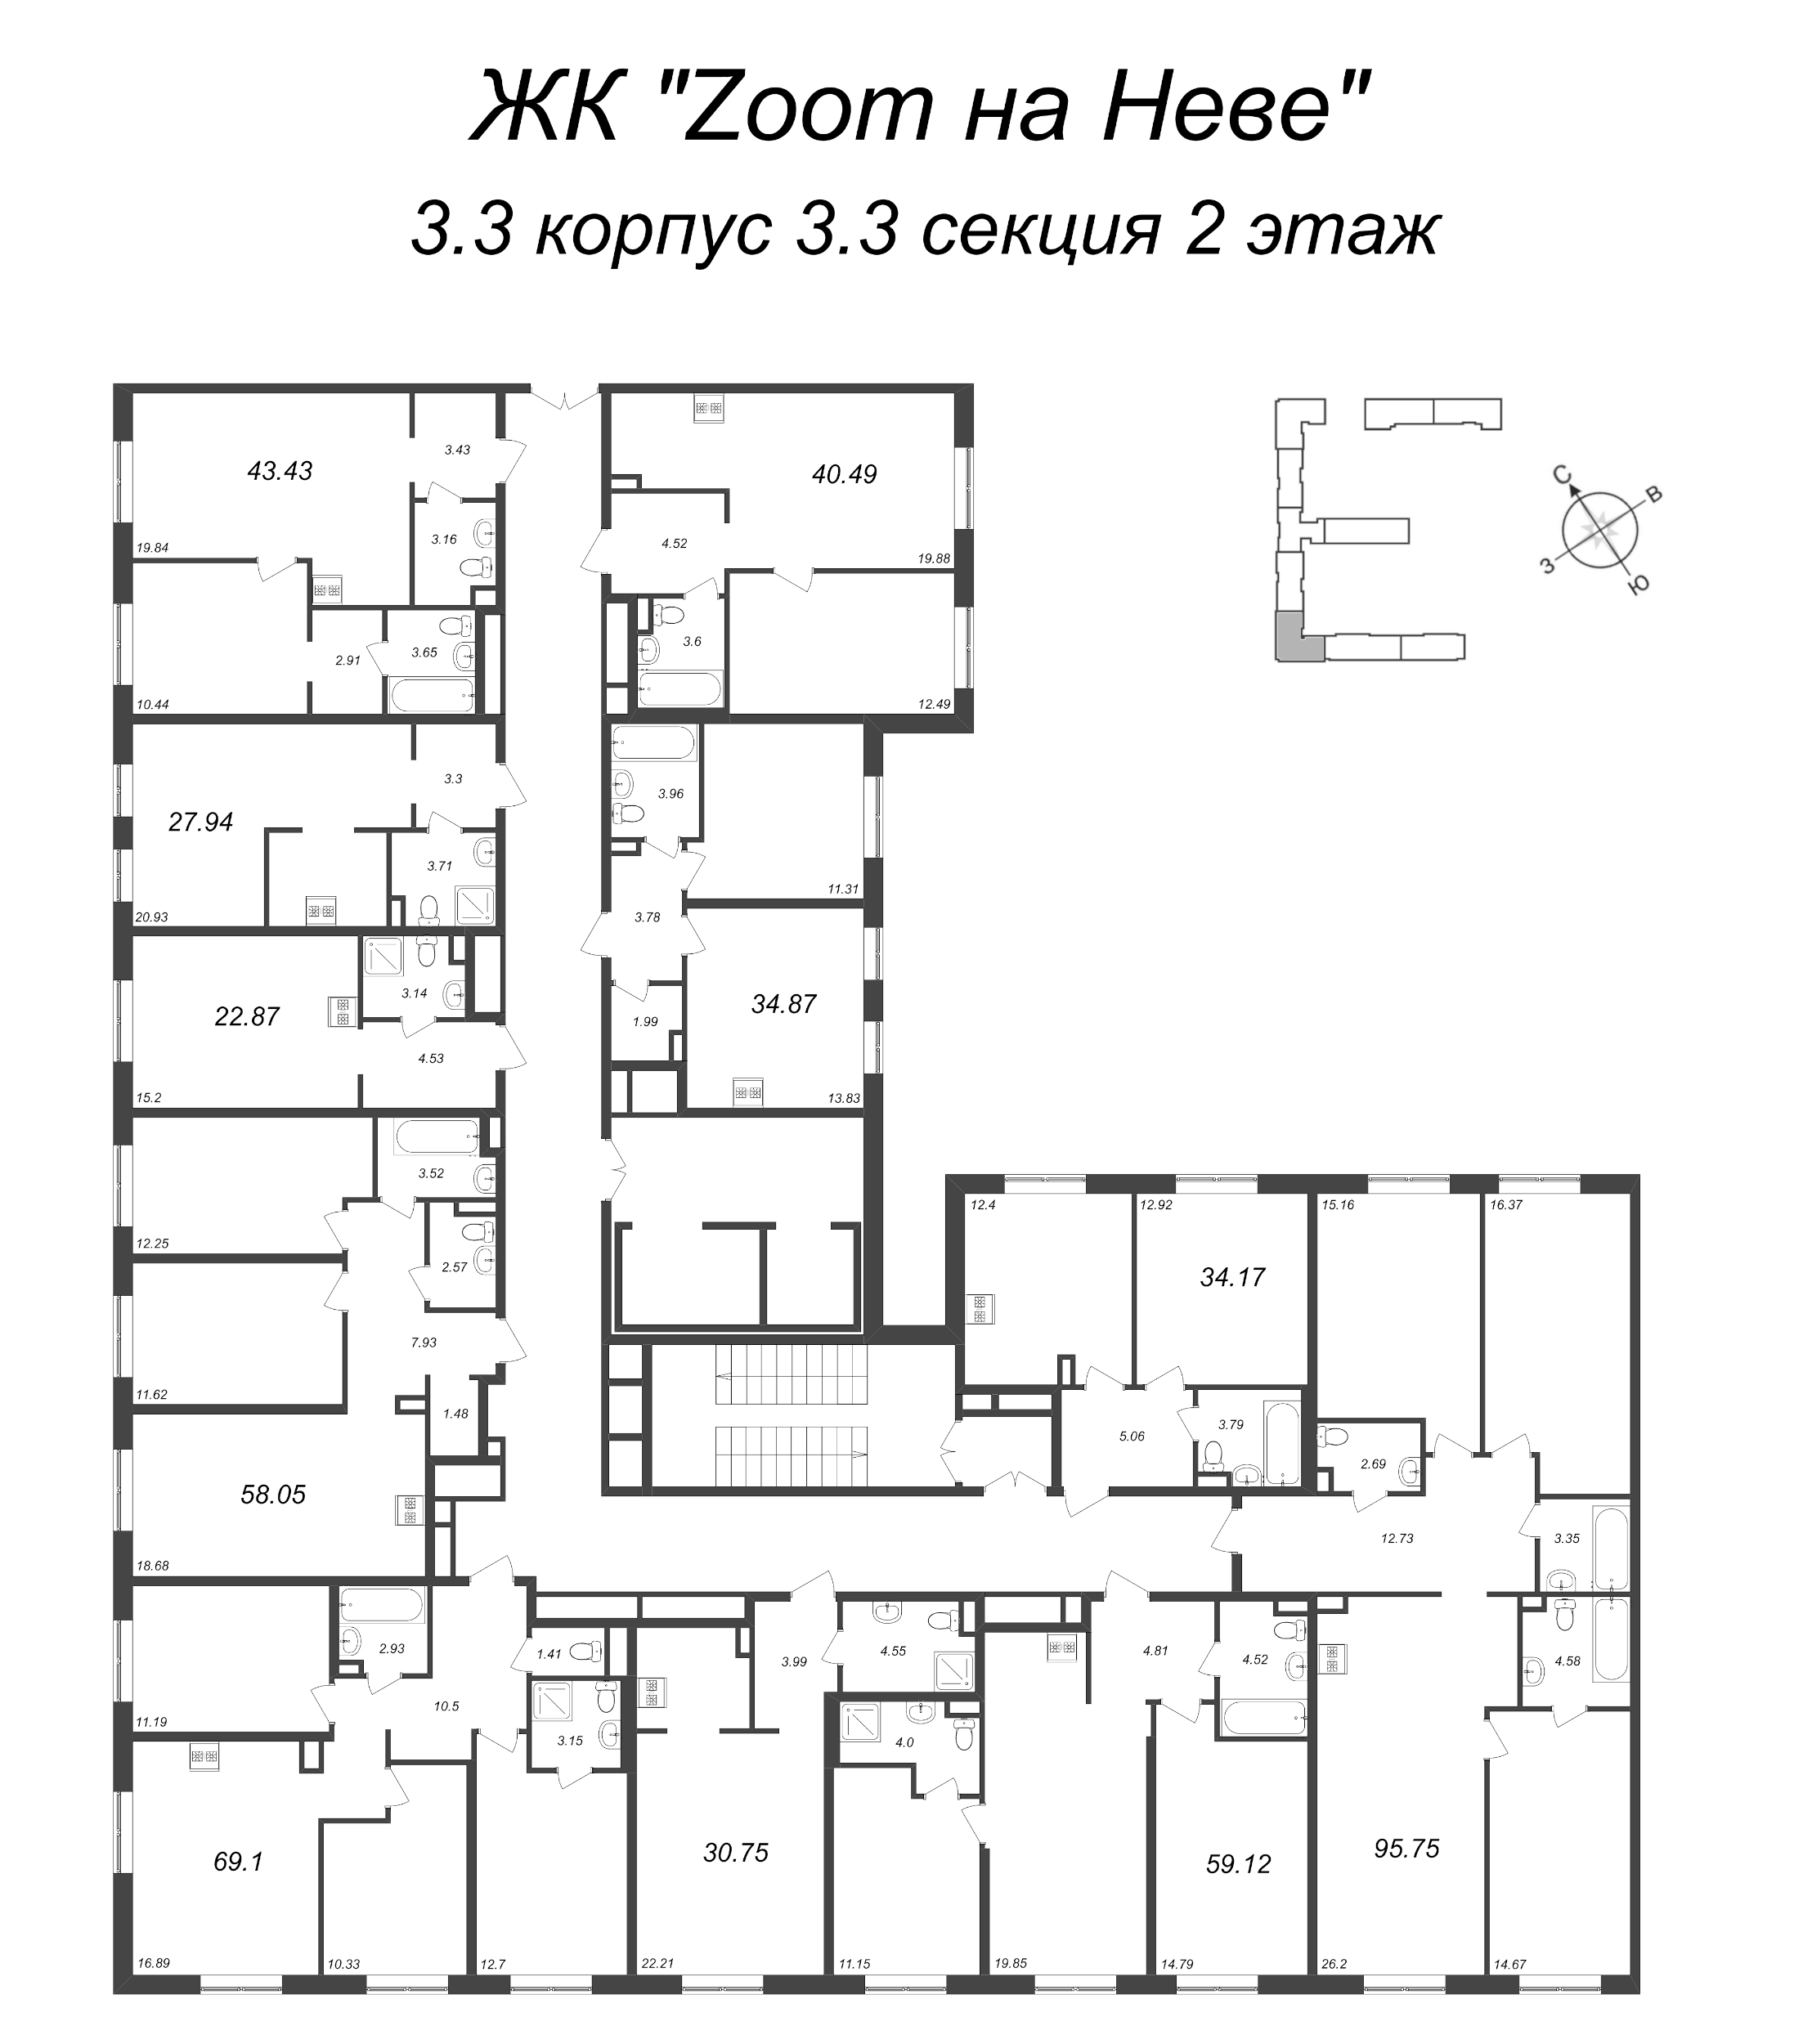 3-комнатная (Евро) квартира, 58.05 м² - планировка этажа